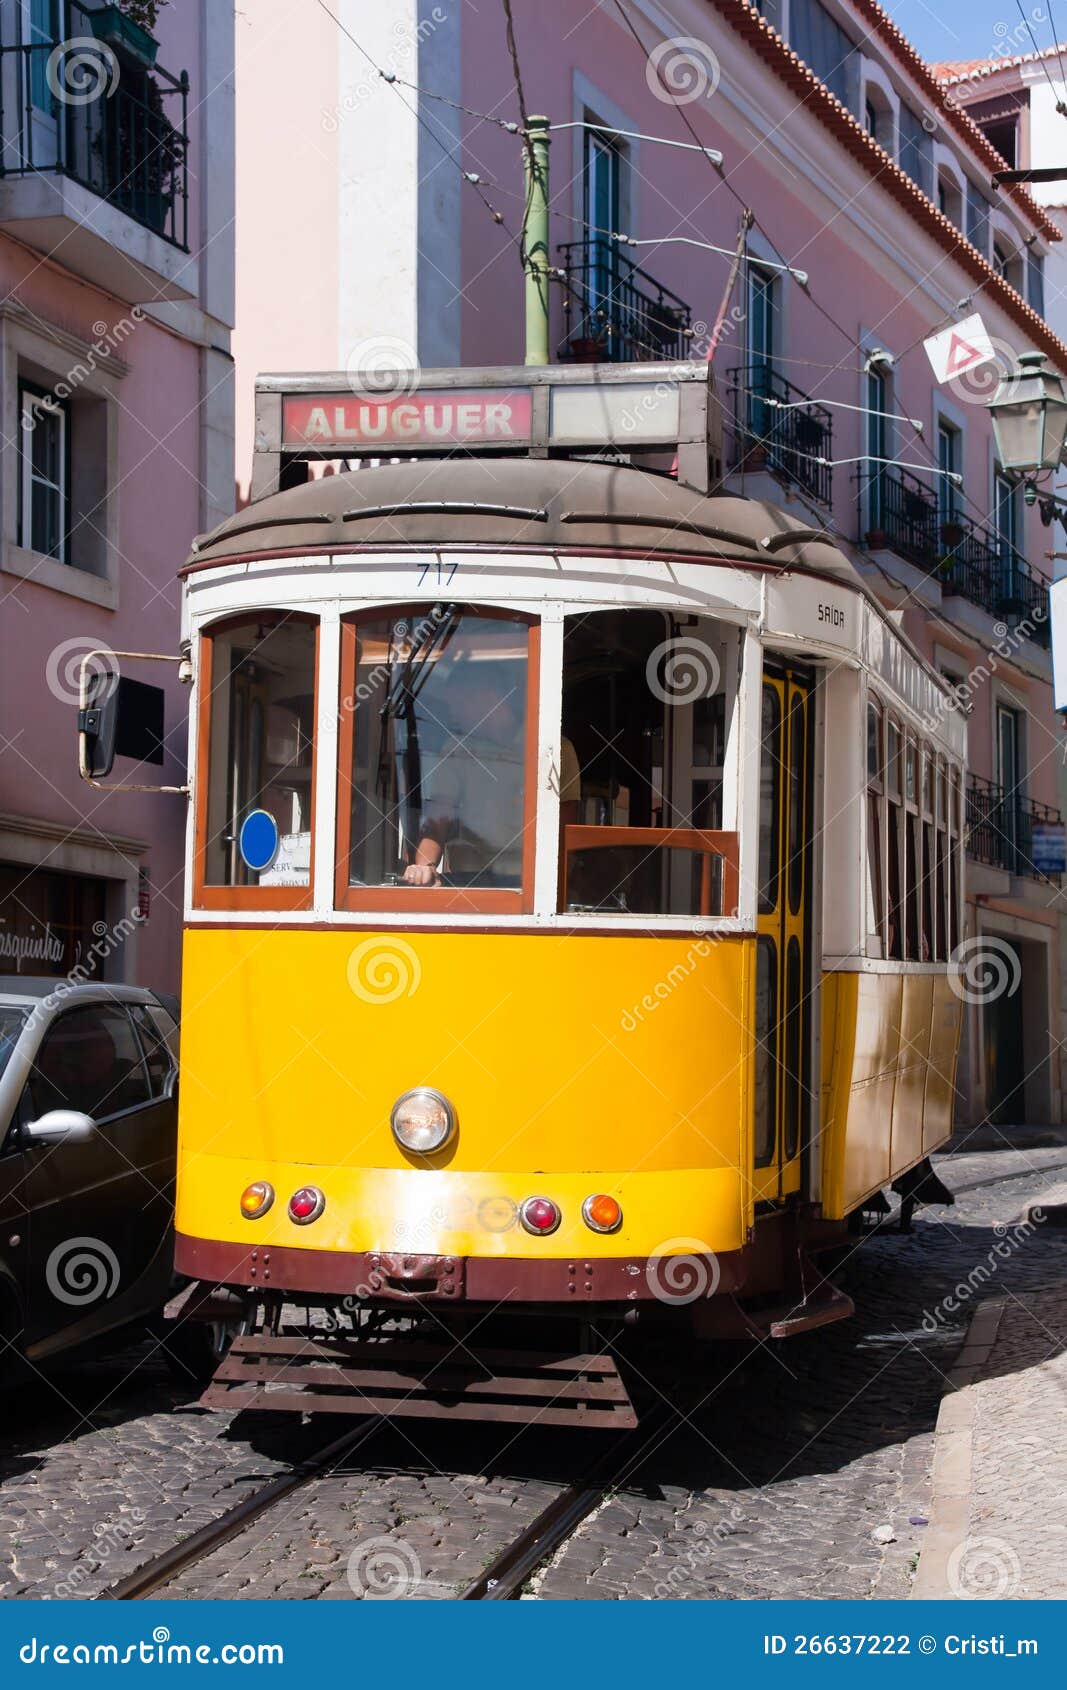 historical yellow tram in lisbon